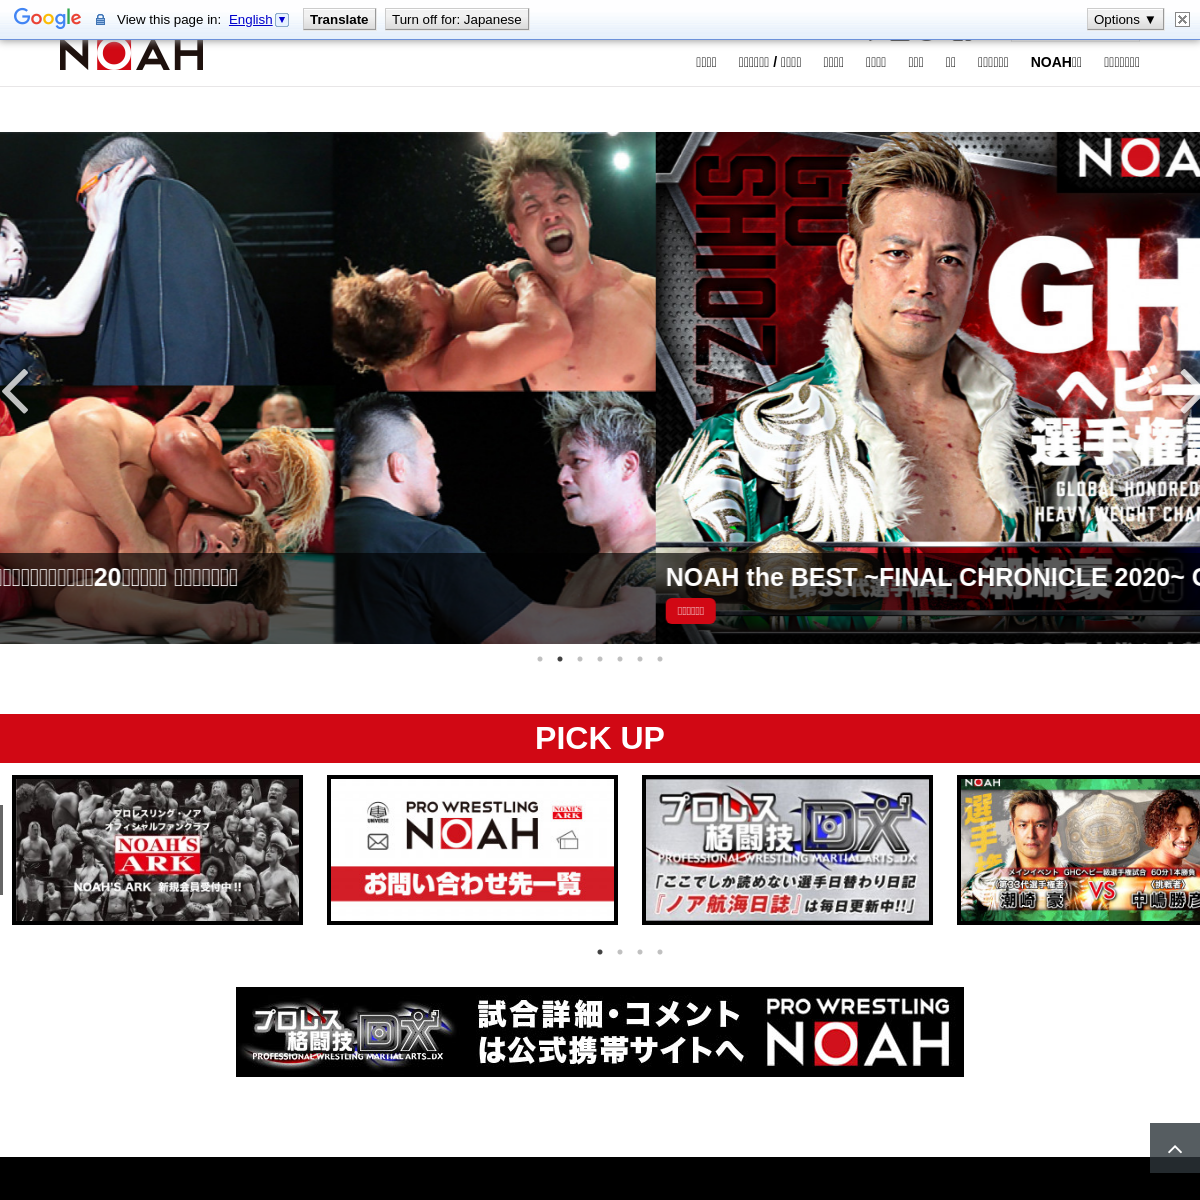 A complete backup of noah.co.jp